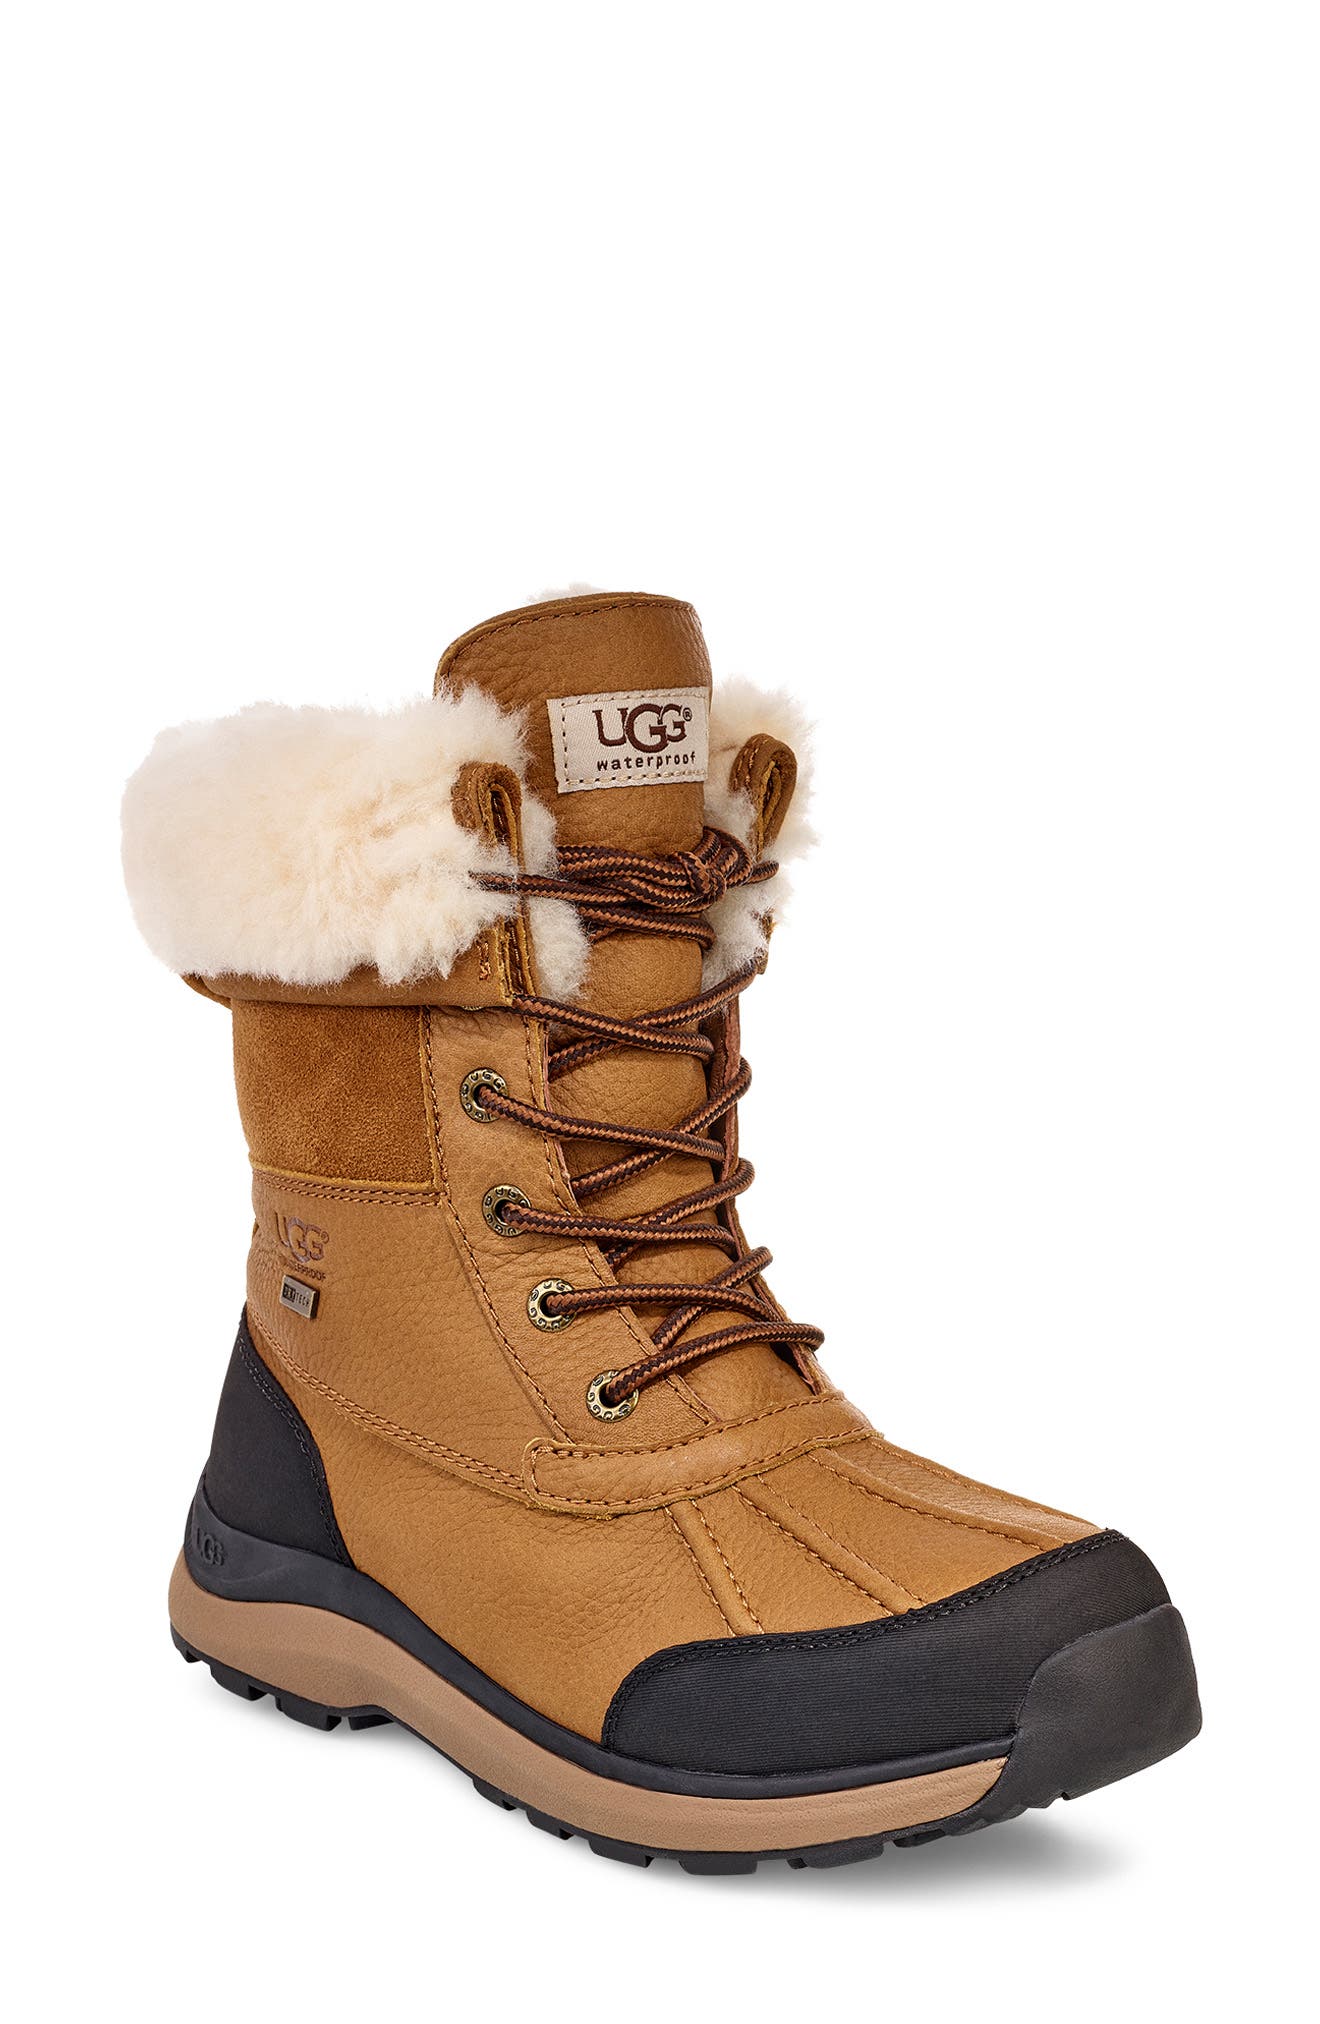 women's winter boots on sale